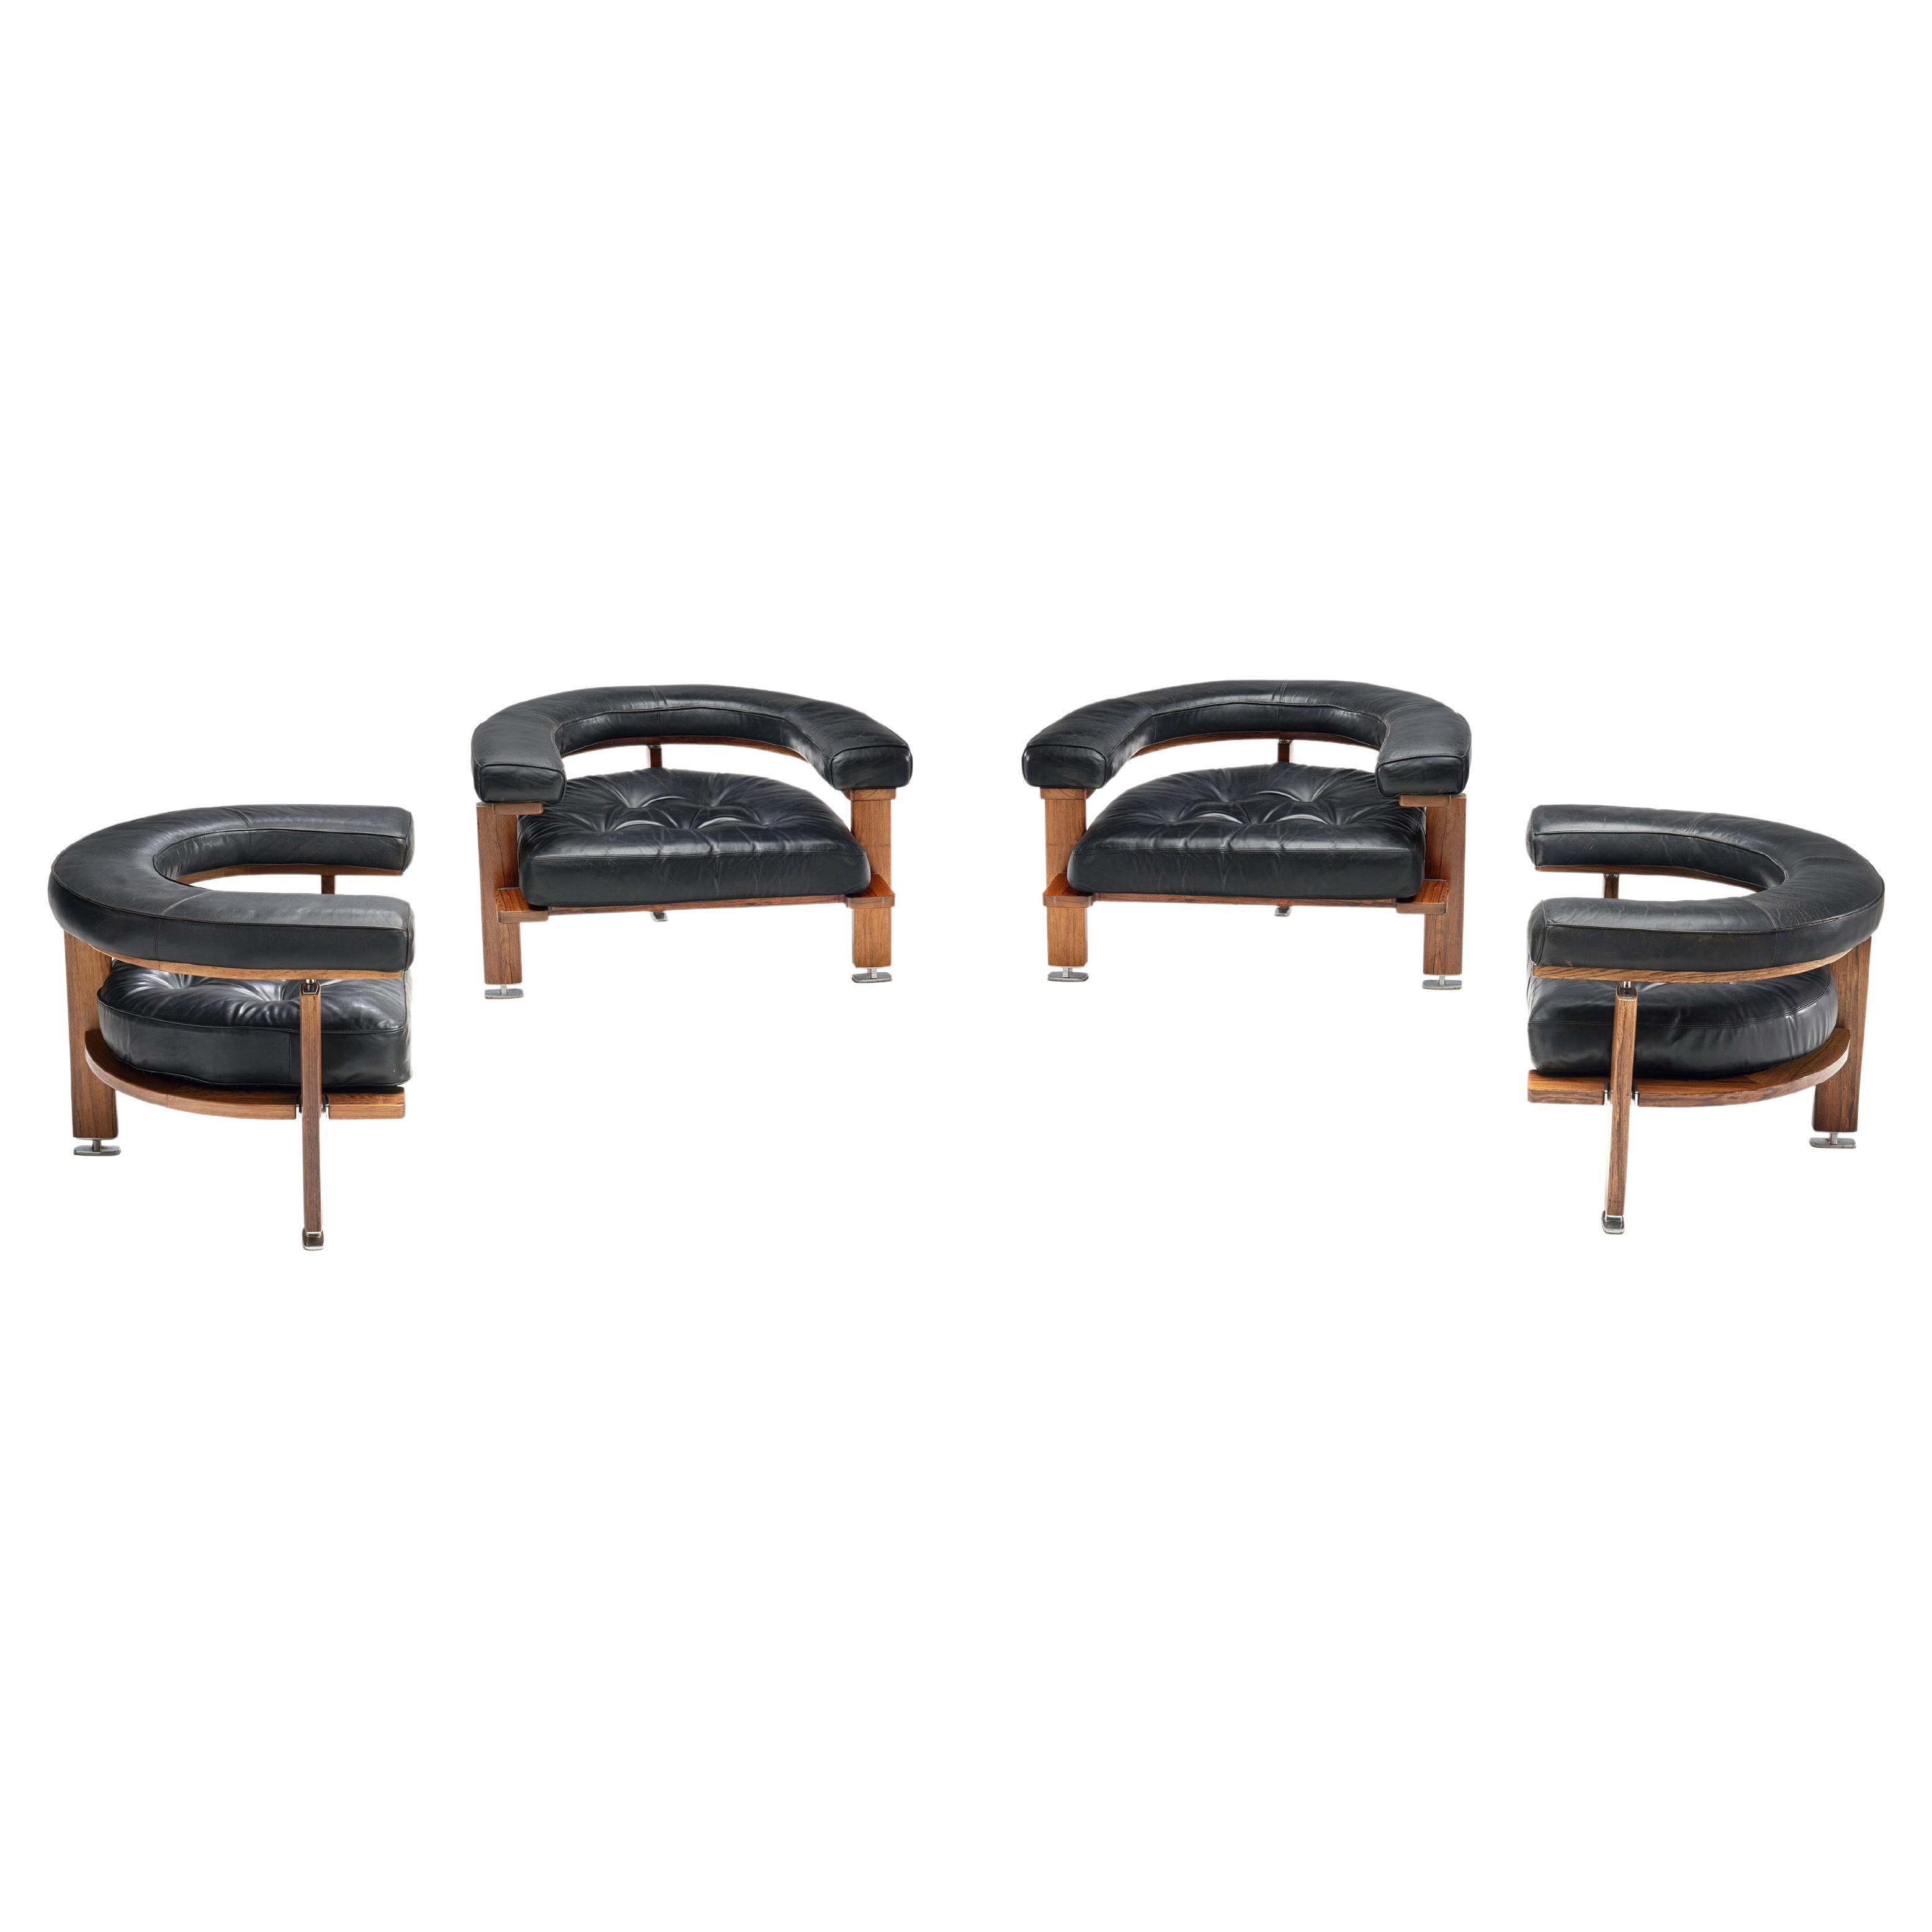 Set of Four "Polar" Lounge Chairs by Esko Pajamies, Finland 1960s